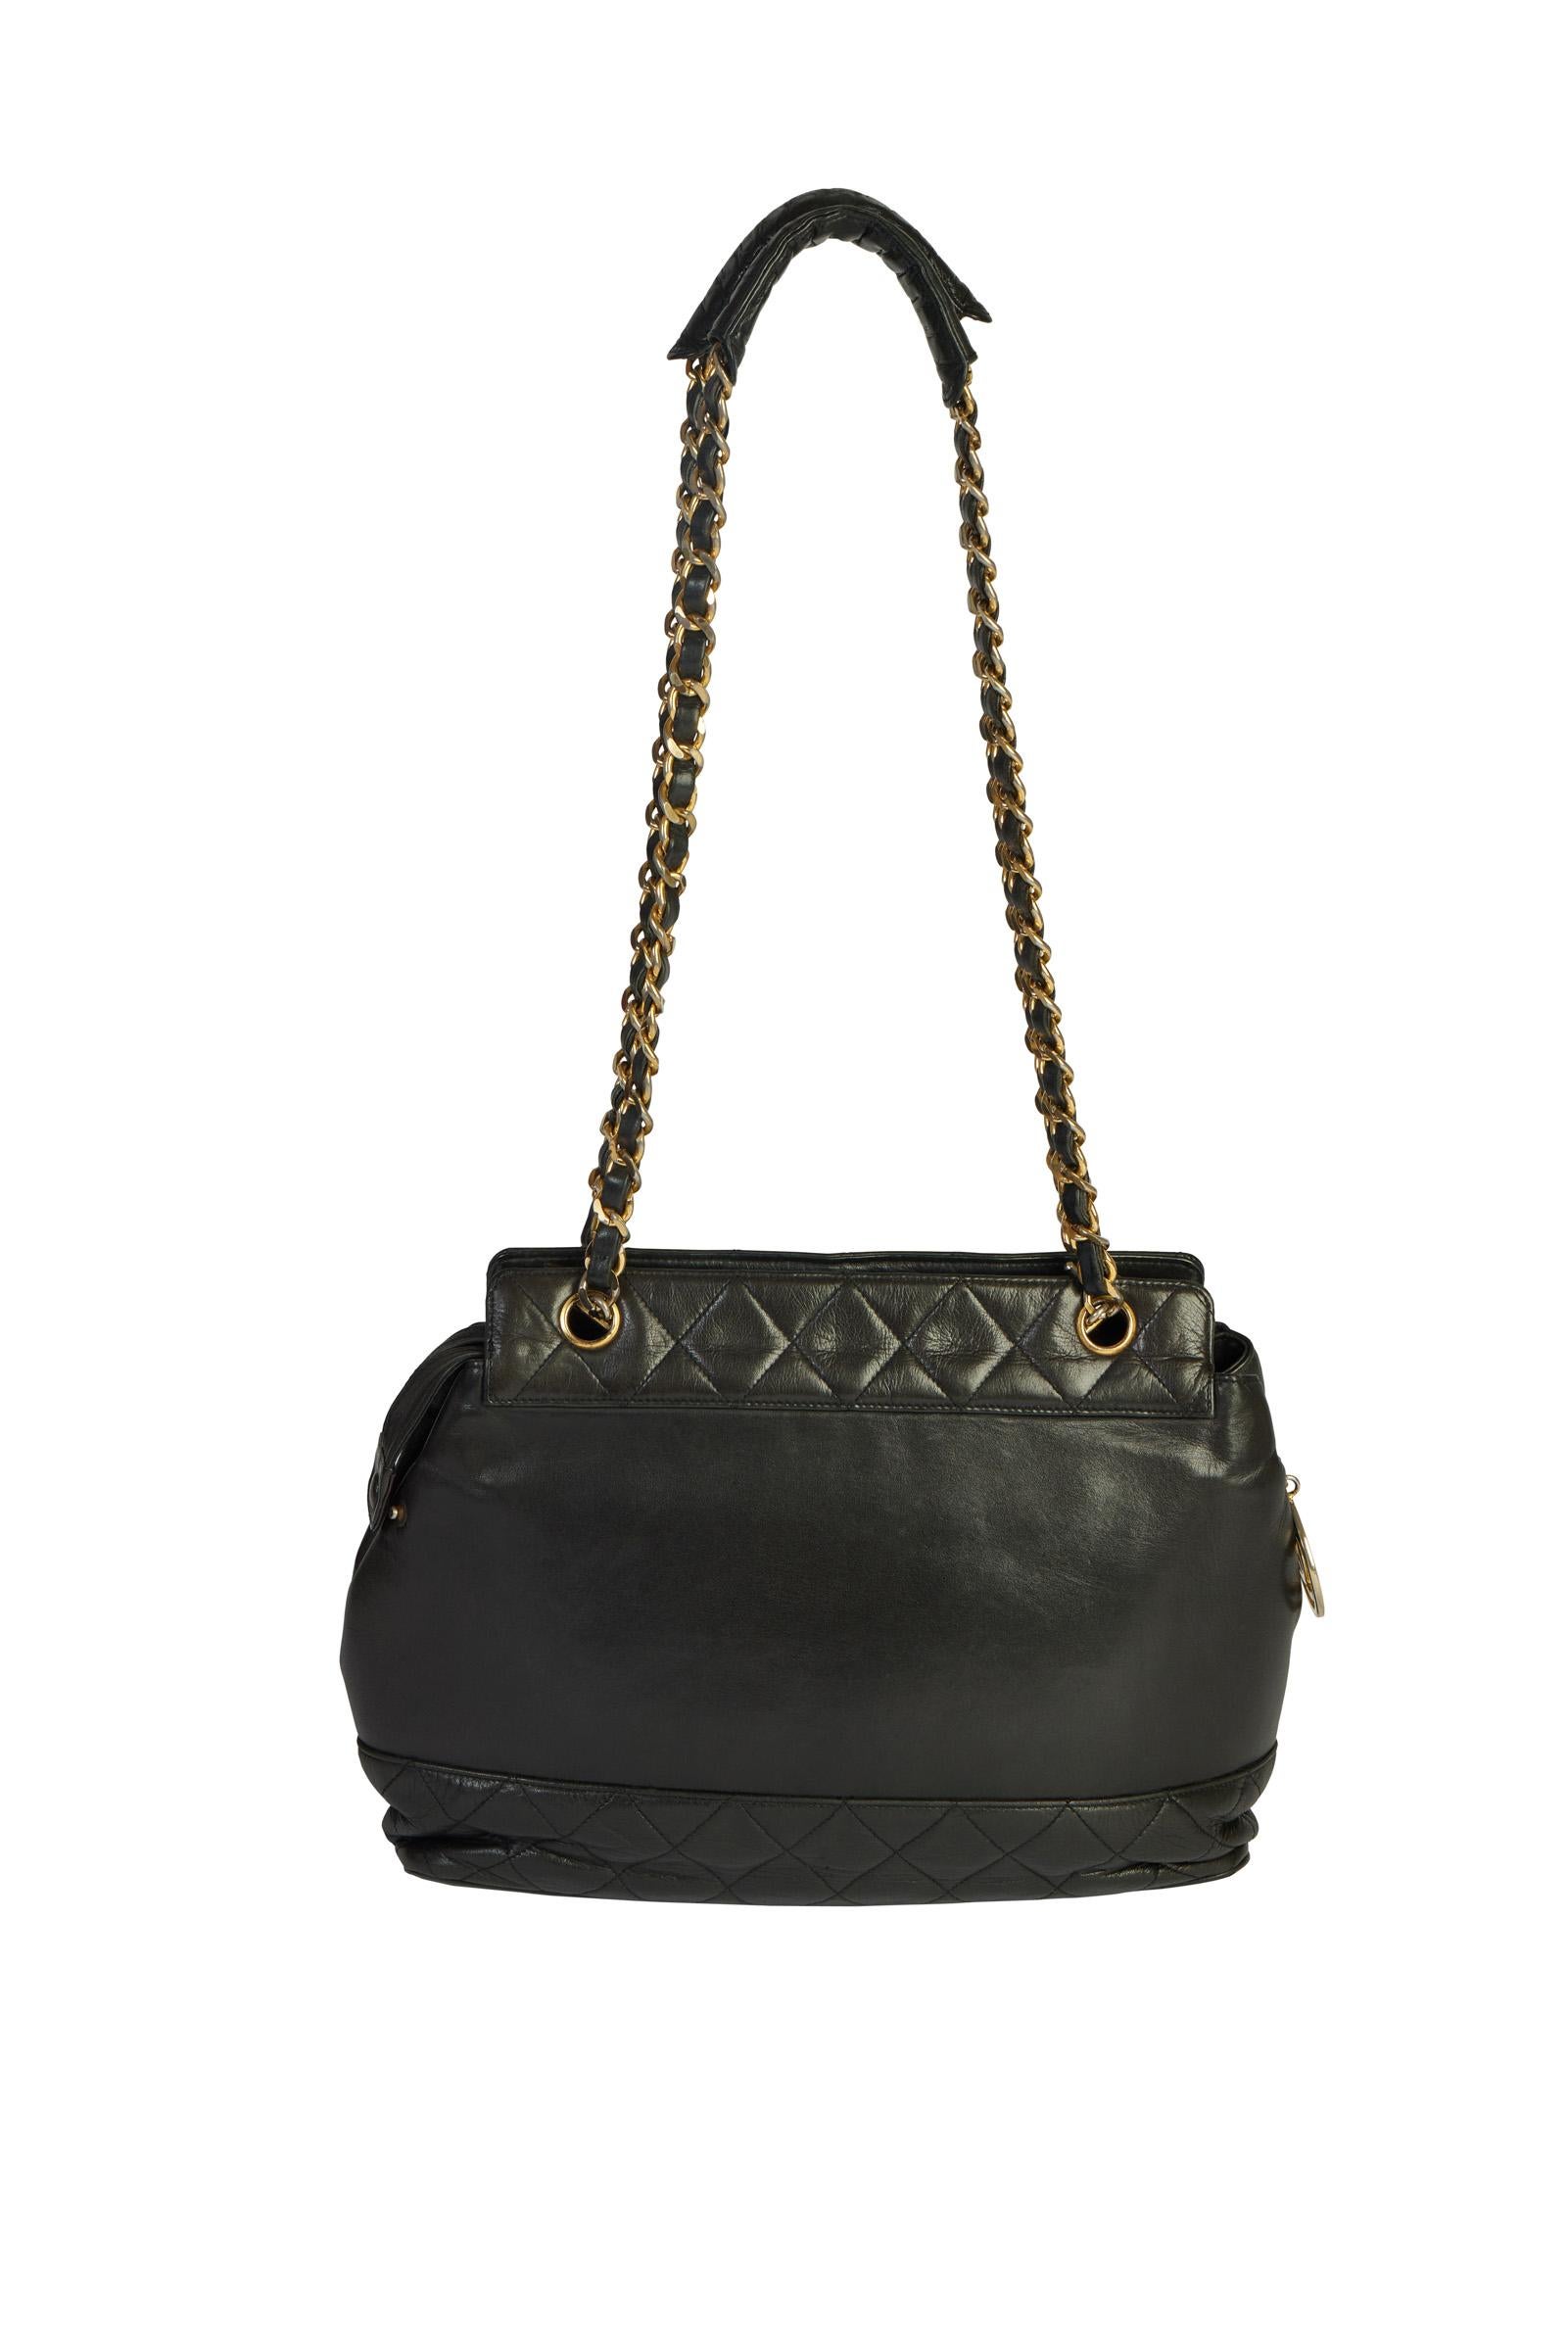 Chanel 80s Black Vintage Shoulder Bag In Good Condition In West Hollywood, CA